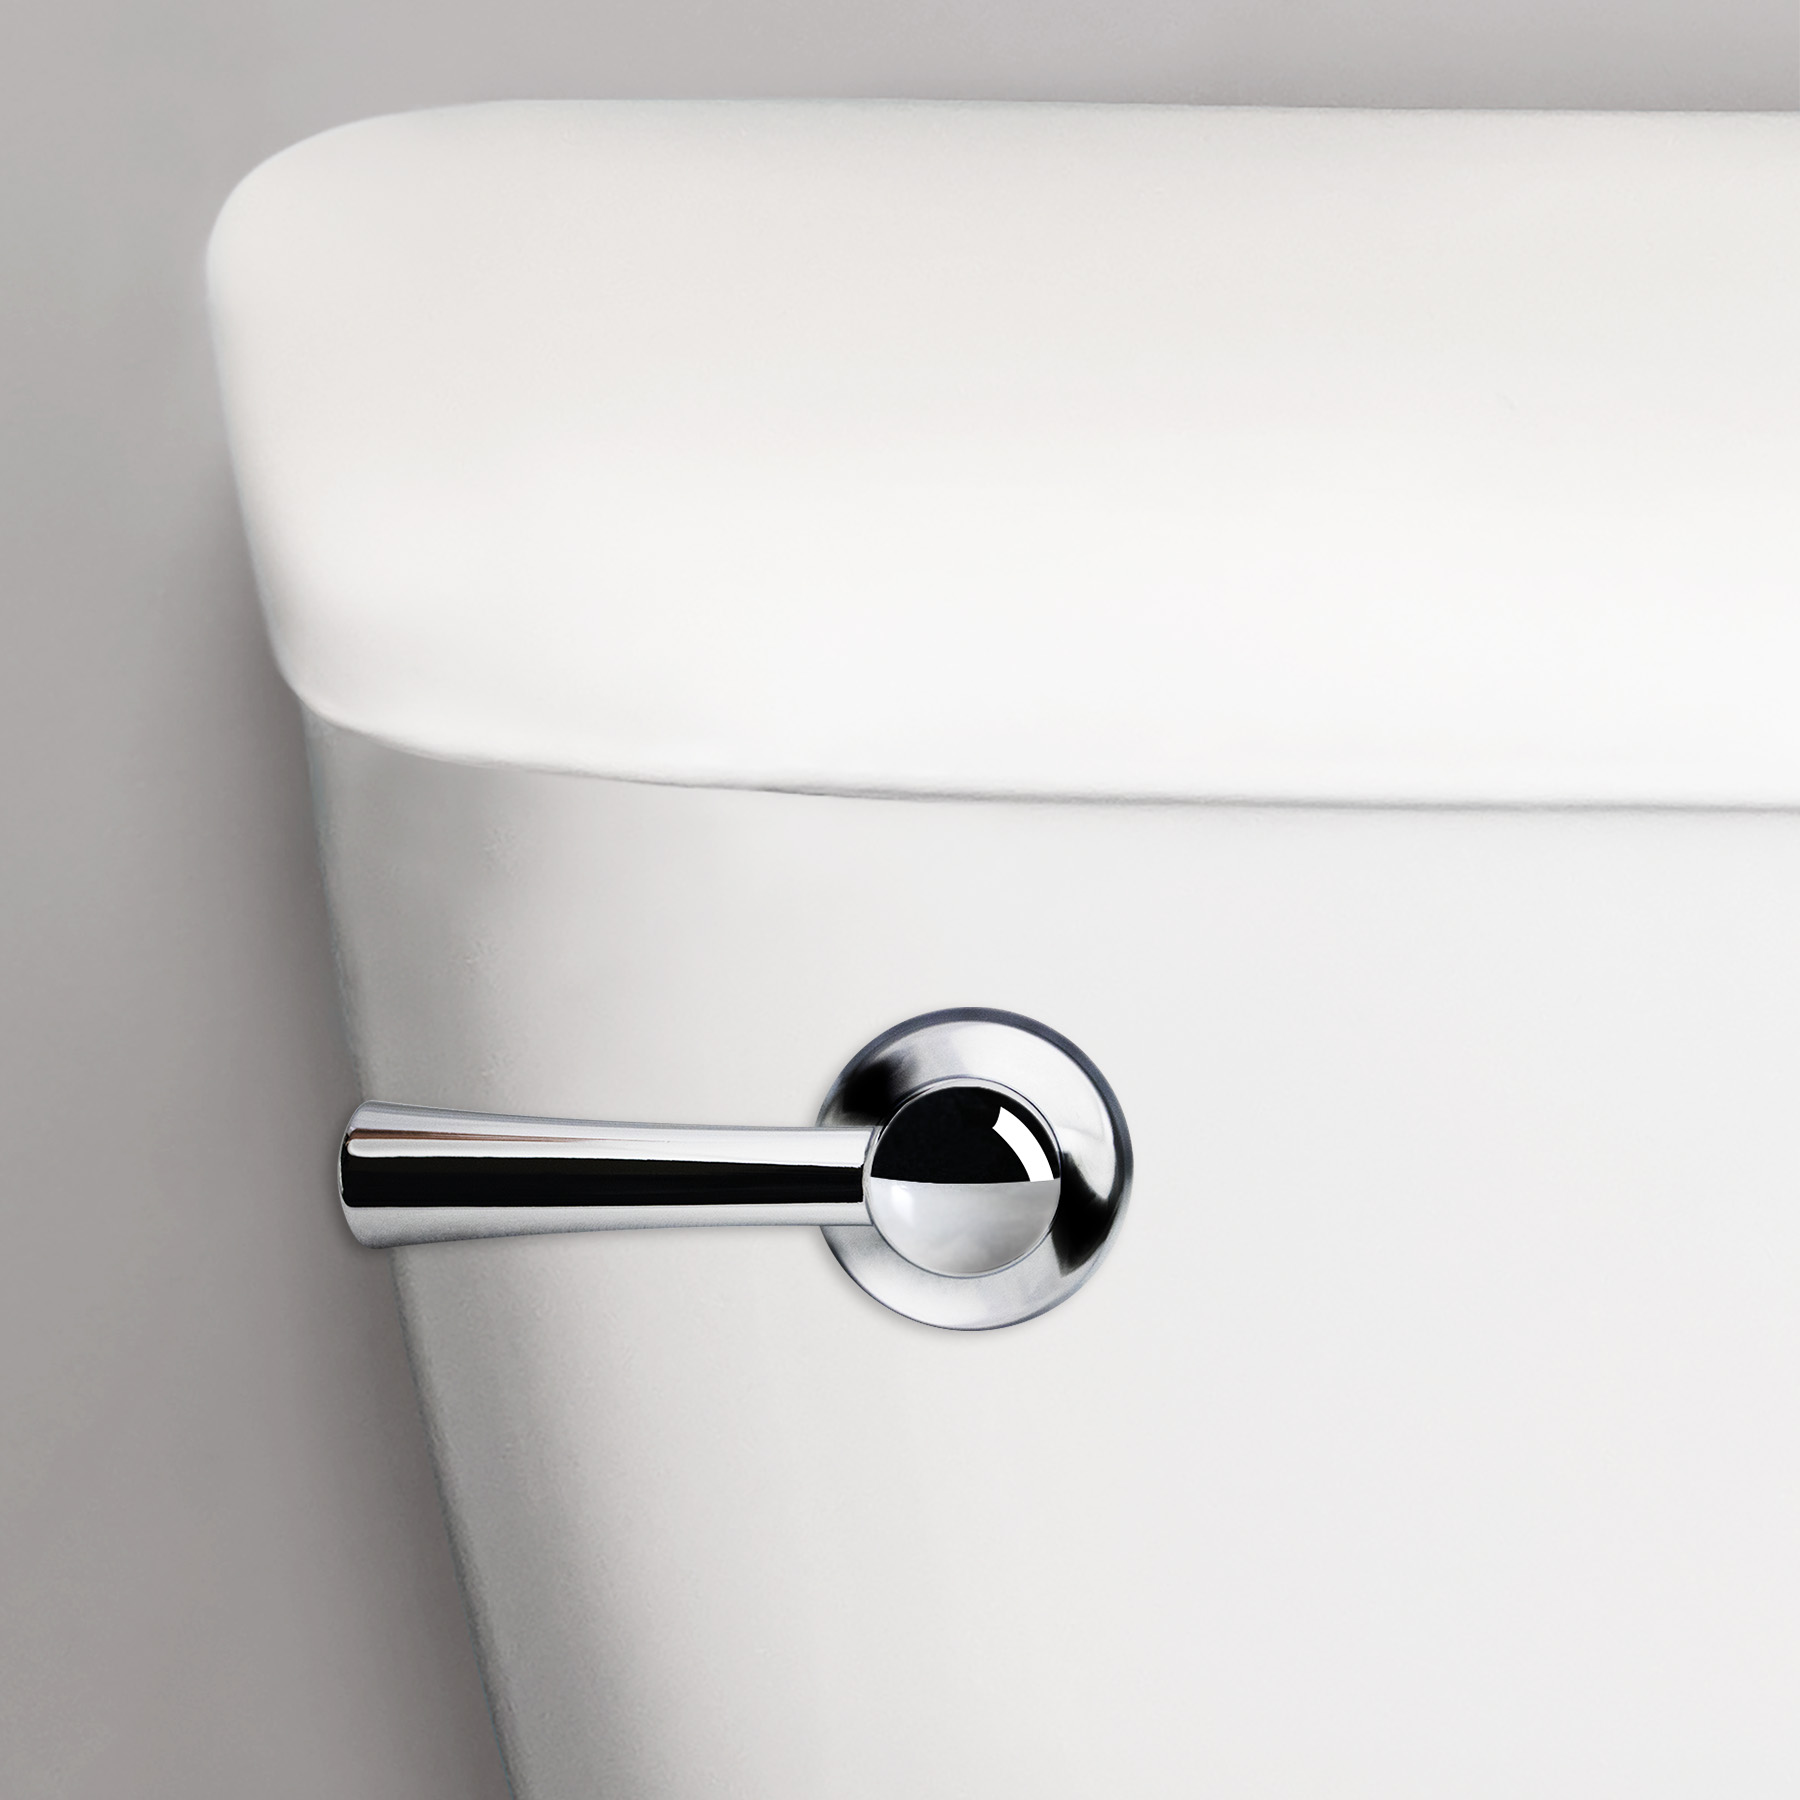 Chrome flush handle close up on a toilet tank